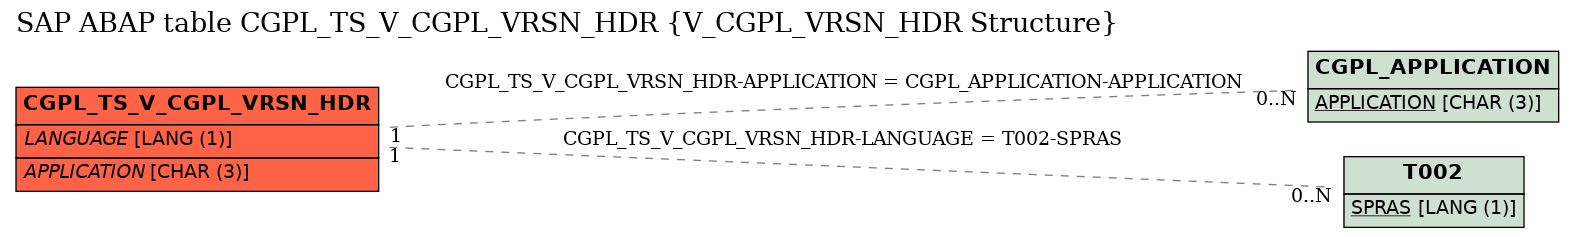 E-R Diagram for table CGPL_TS_V_CGPL_VRSN_HDR (V_CGPL_VRSN_HDR Structure)